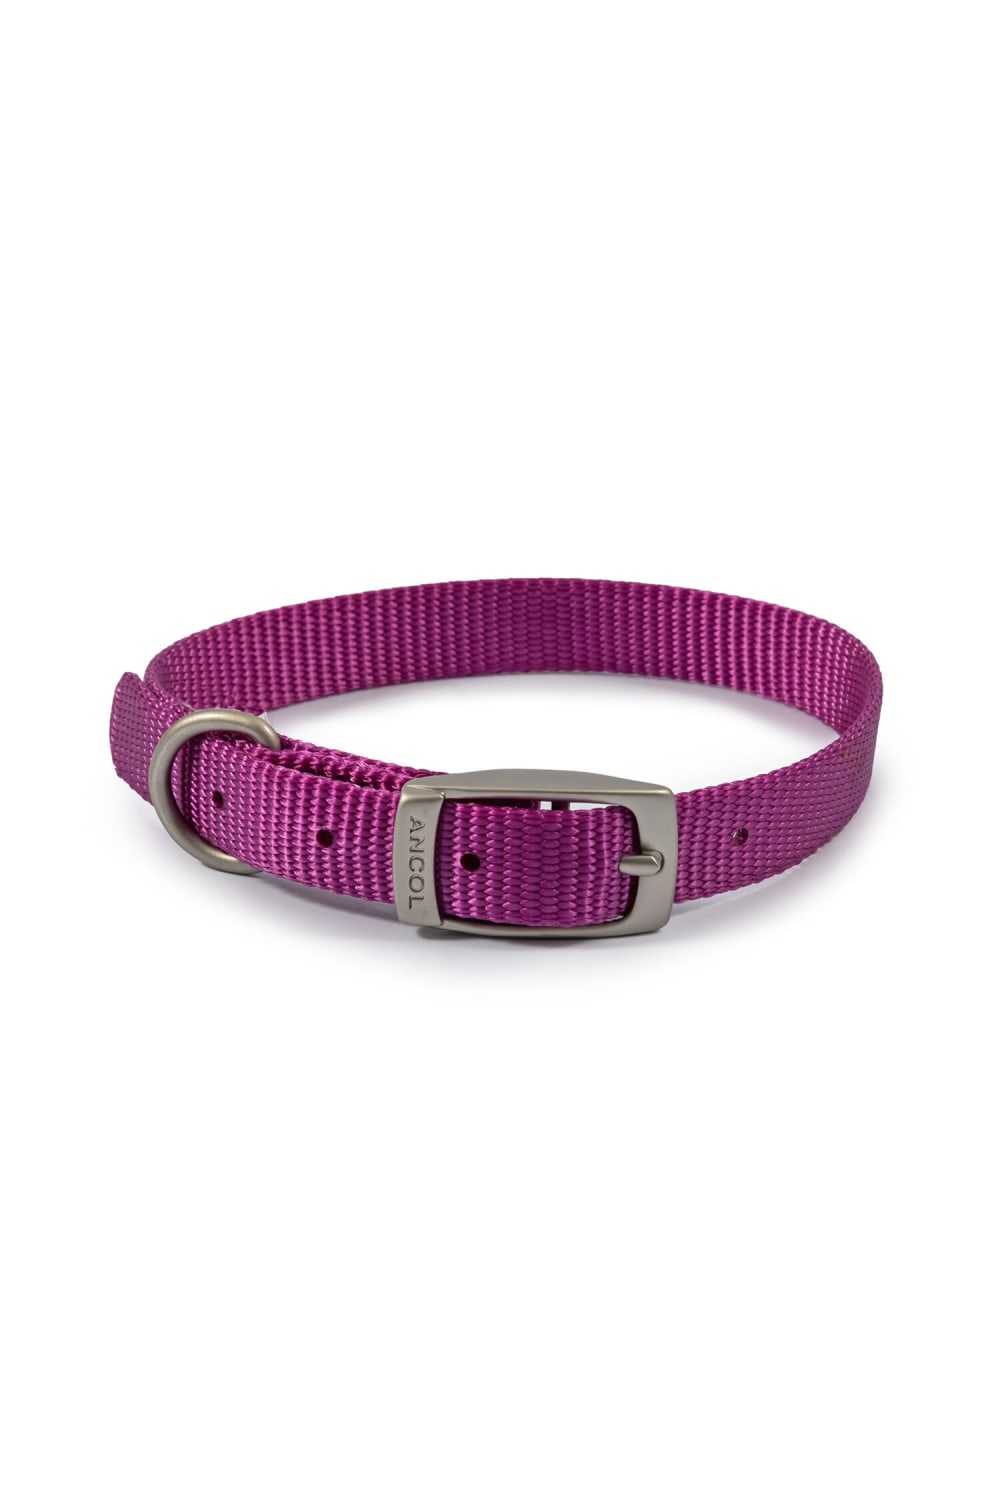 Ancol Viva Dog Collar (Purple) (2)